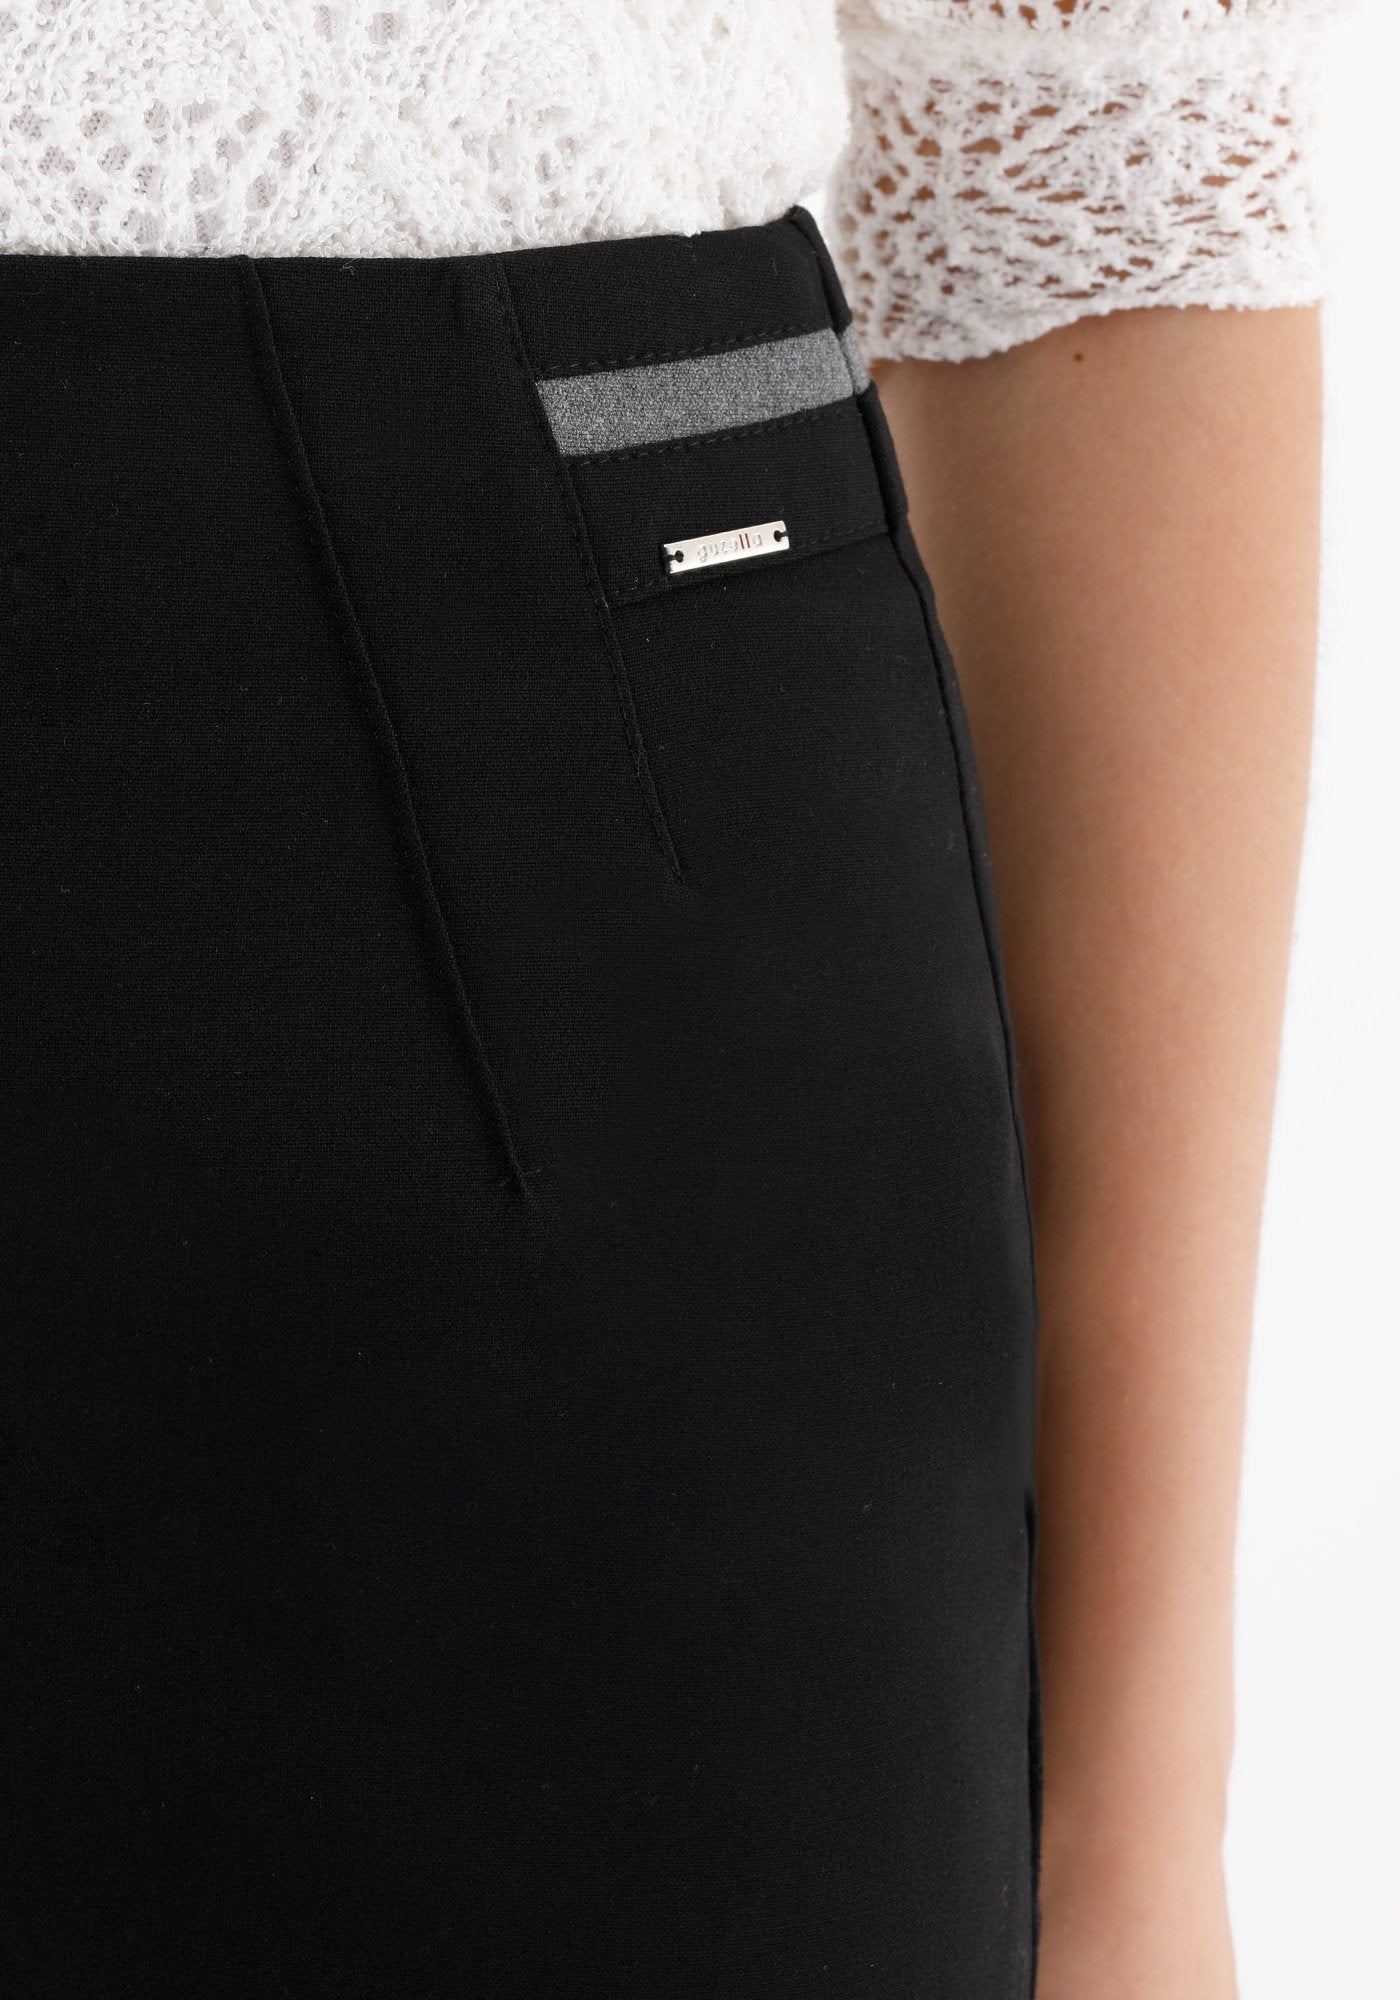 Guzella Flounce A-Line Skirt for Women Ruffle Plaid Semi Fishtail Skirt (Black) Guzella